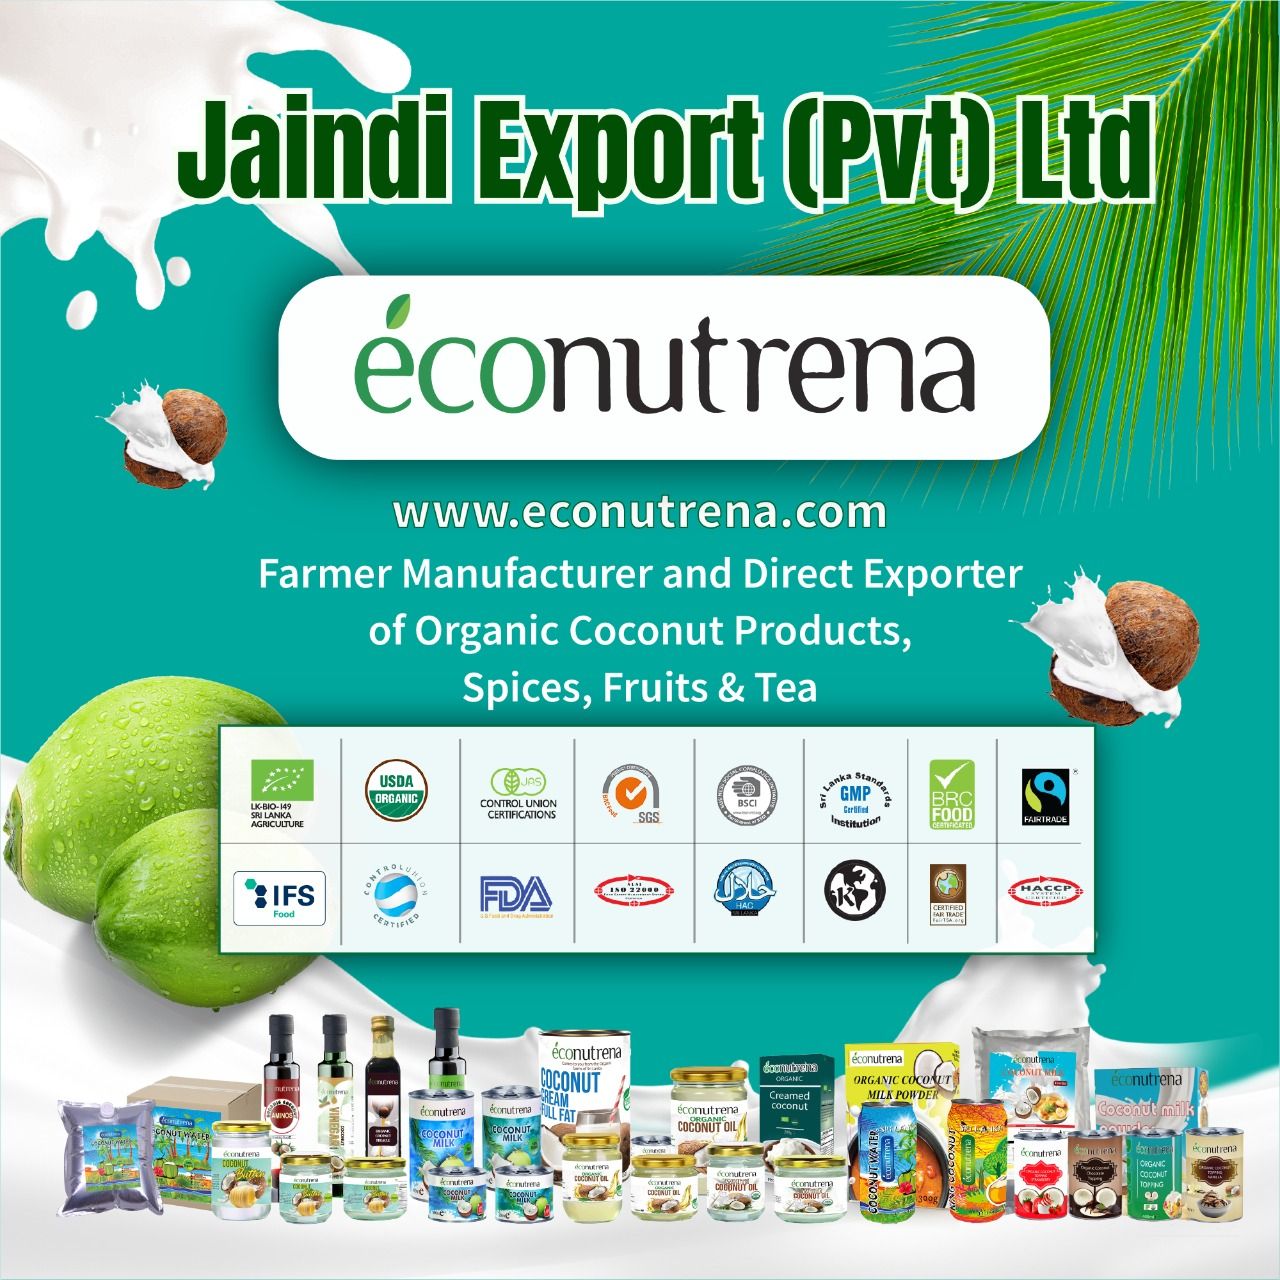 Jaindi Export (Pvt) Ltd